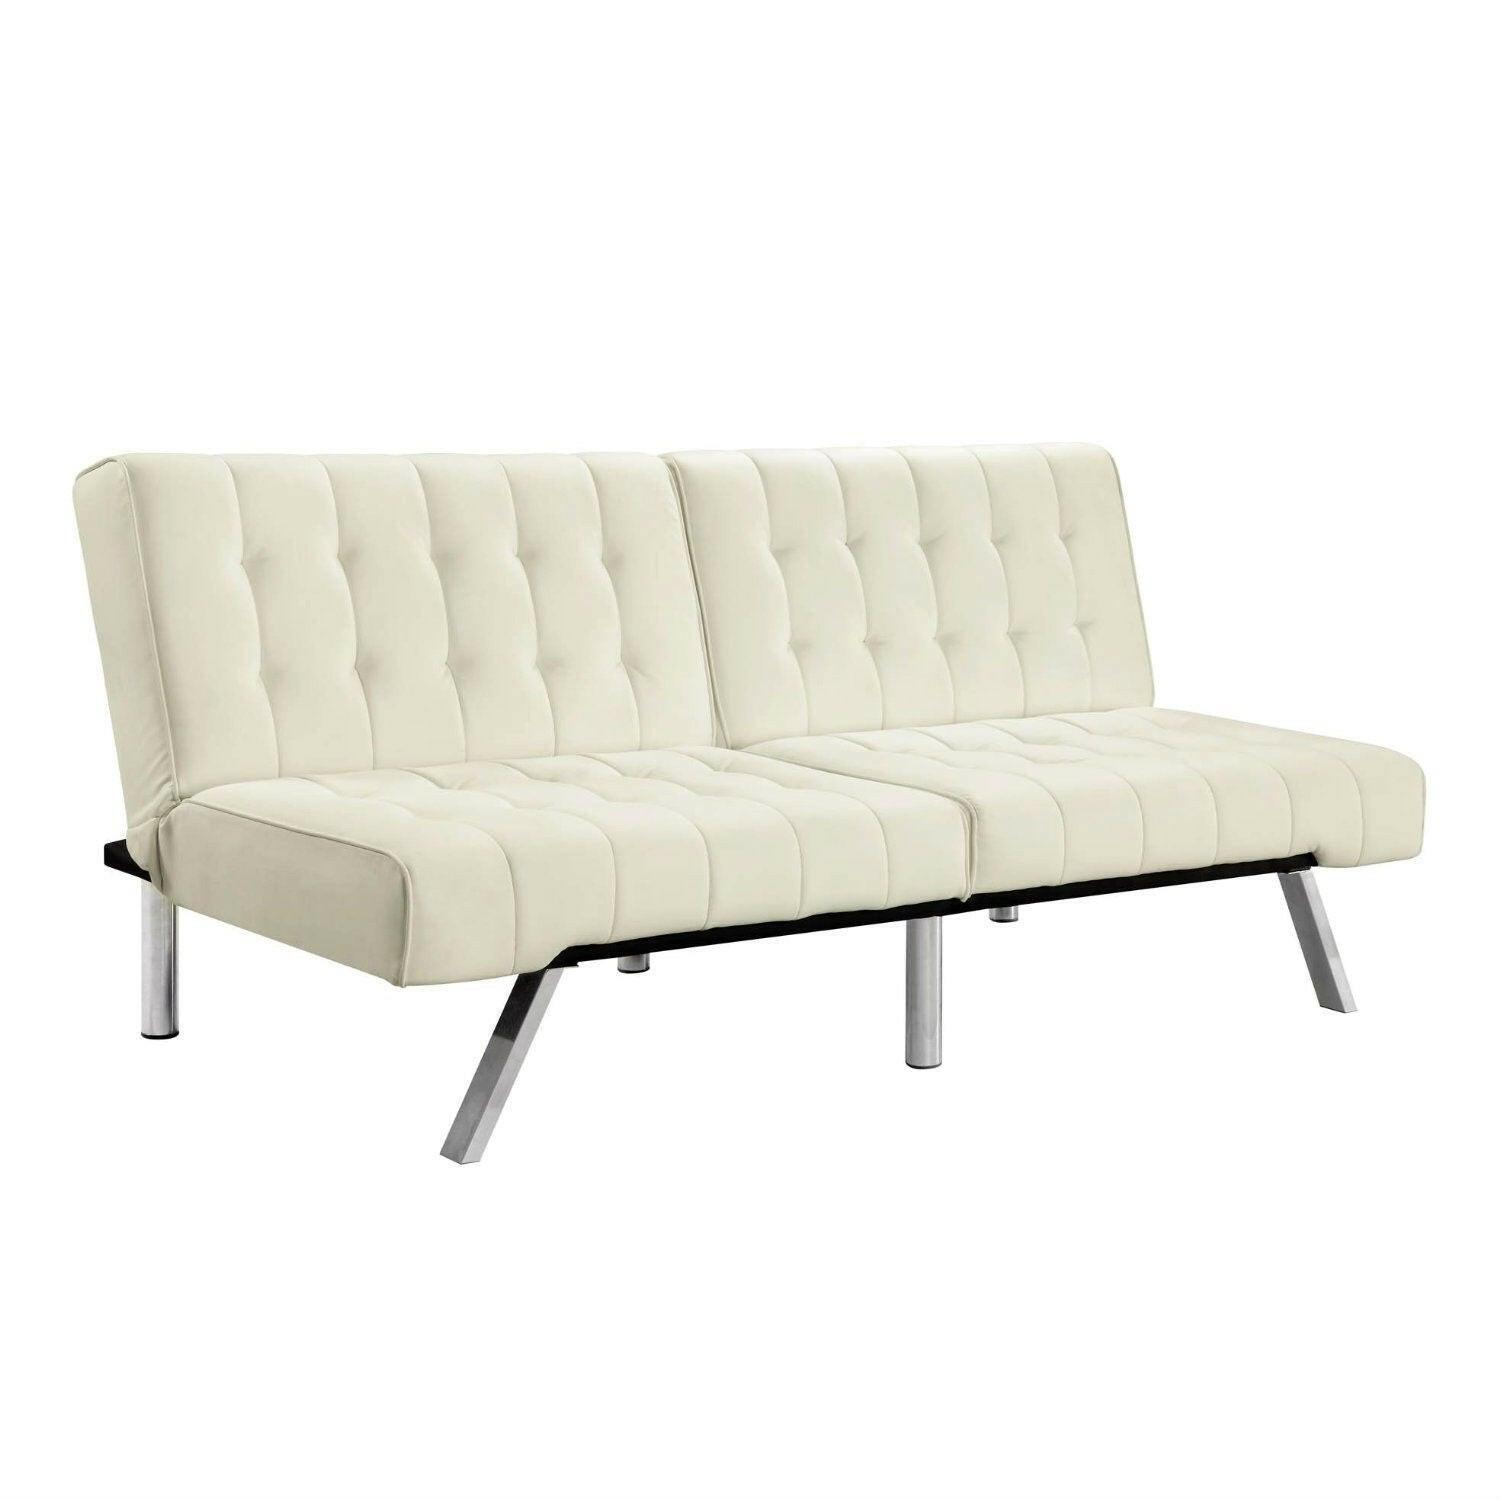 Split-back Modern Futon Style Sleeper Sofa Bed in Vanilla Faux Leather - FurniFindUSA